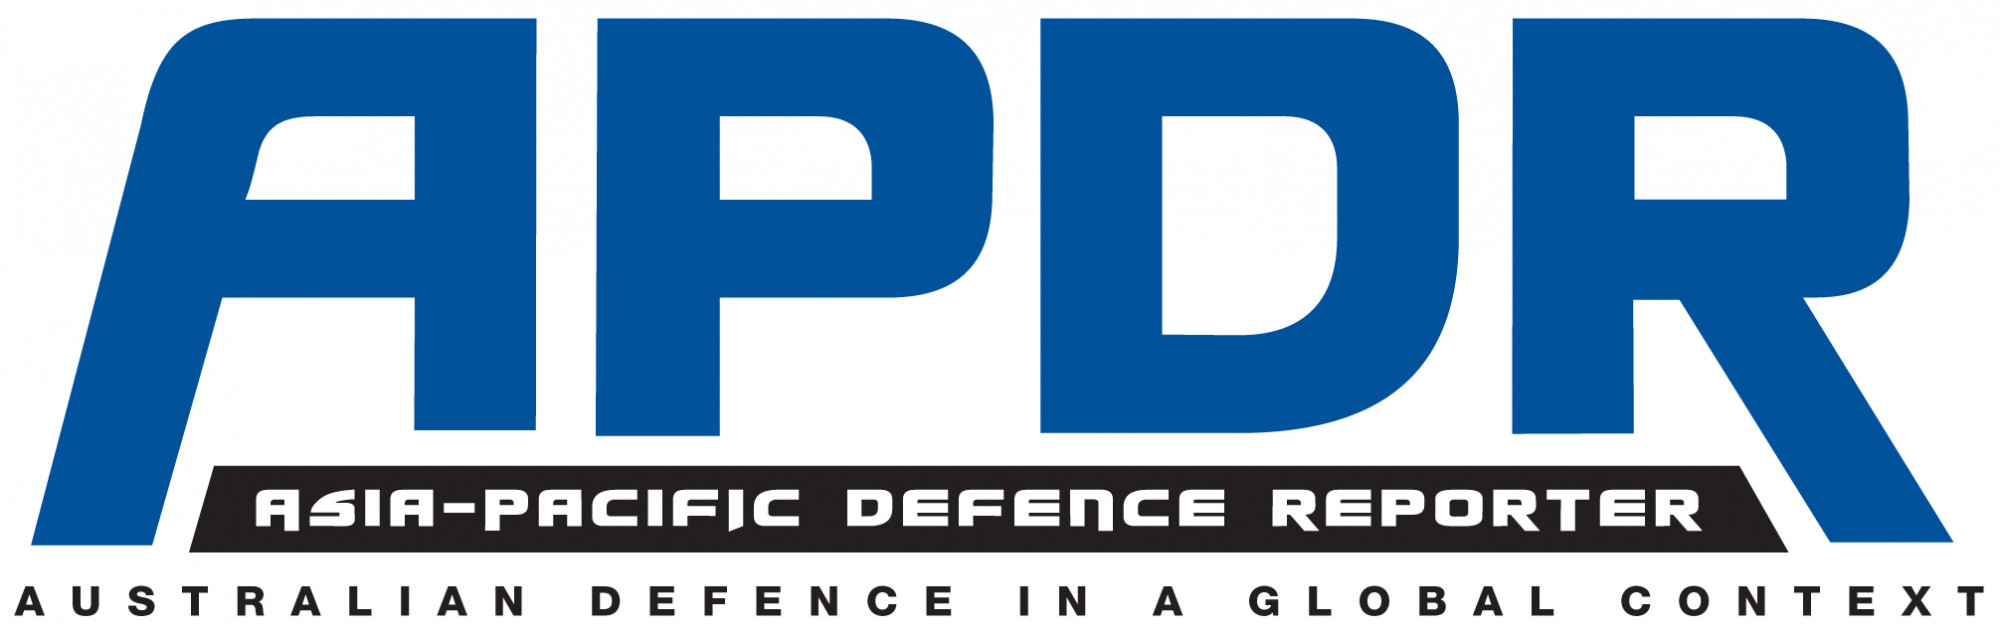 APDR Logo 300dpi.jpg